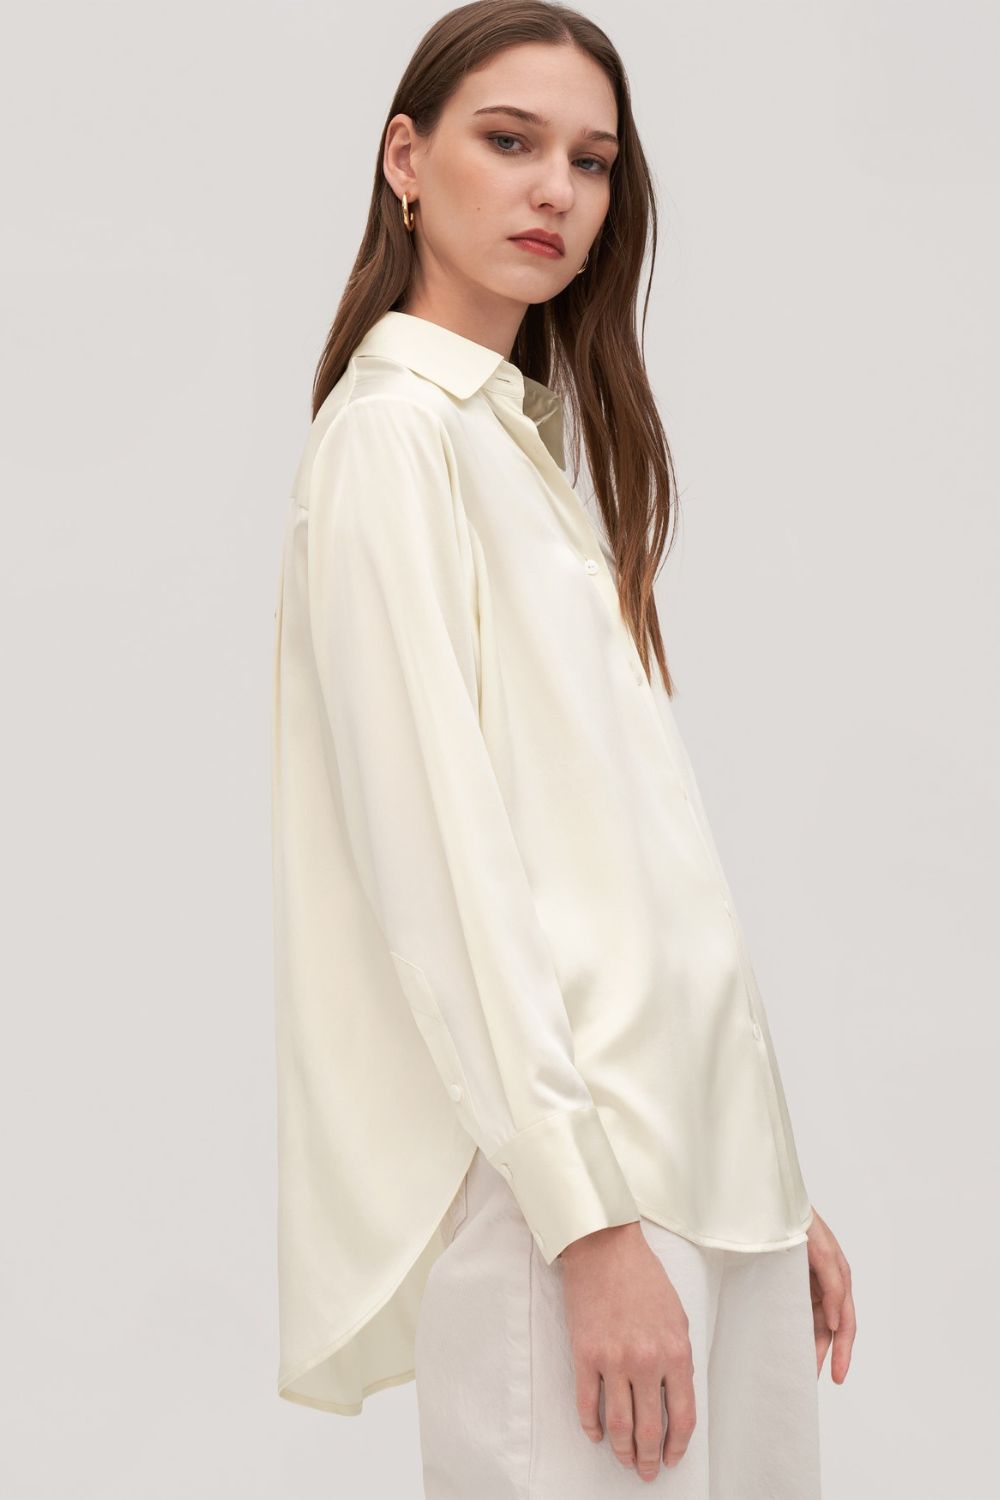 Women's silk blouse 